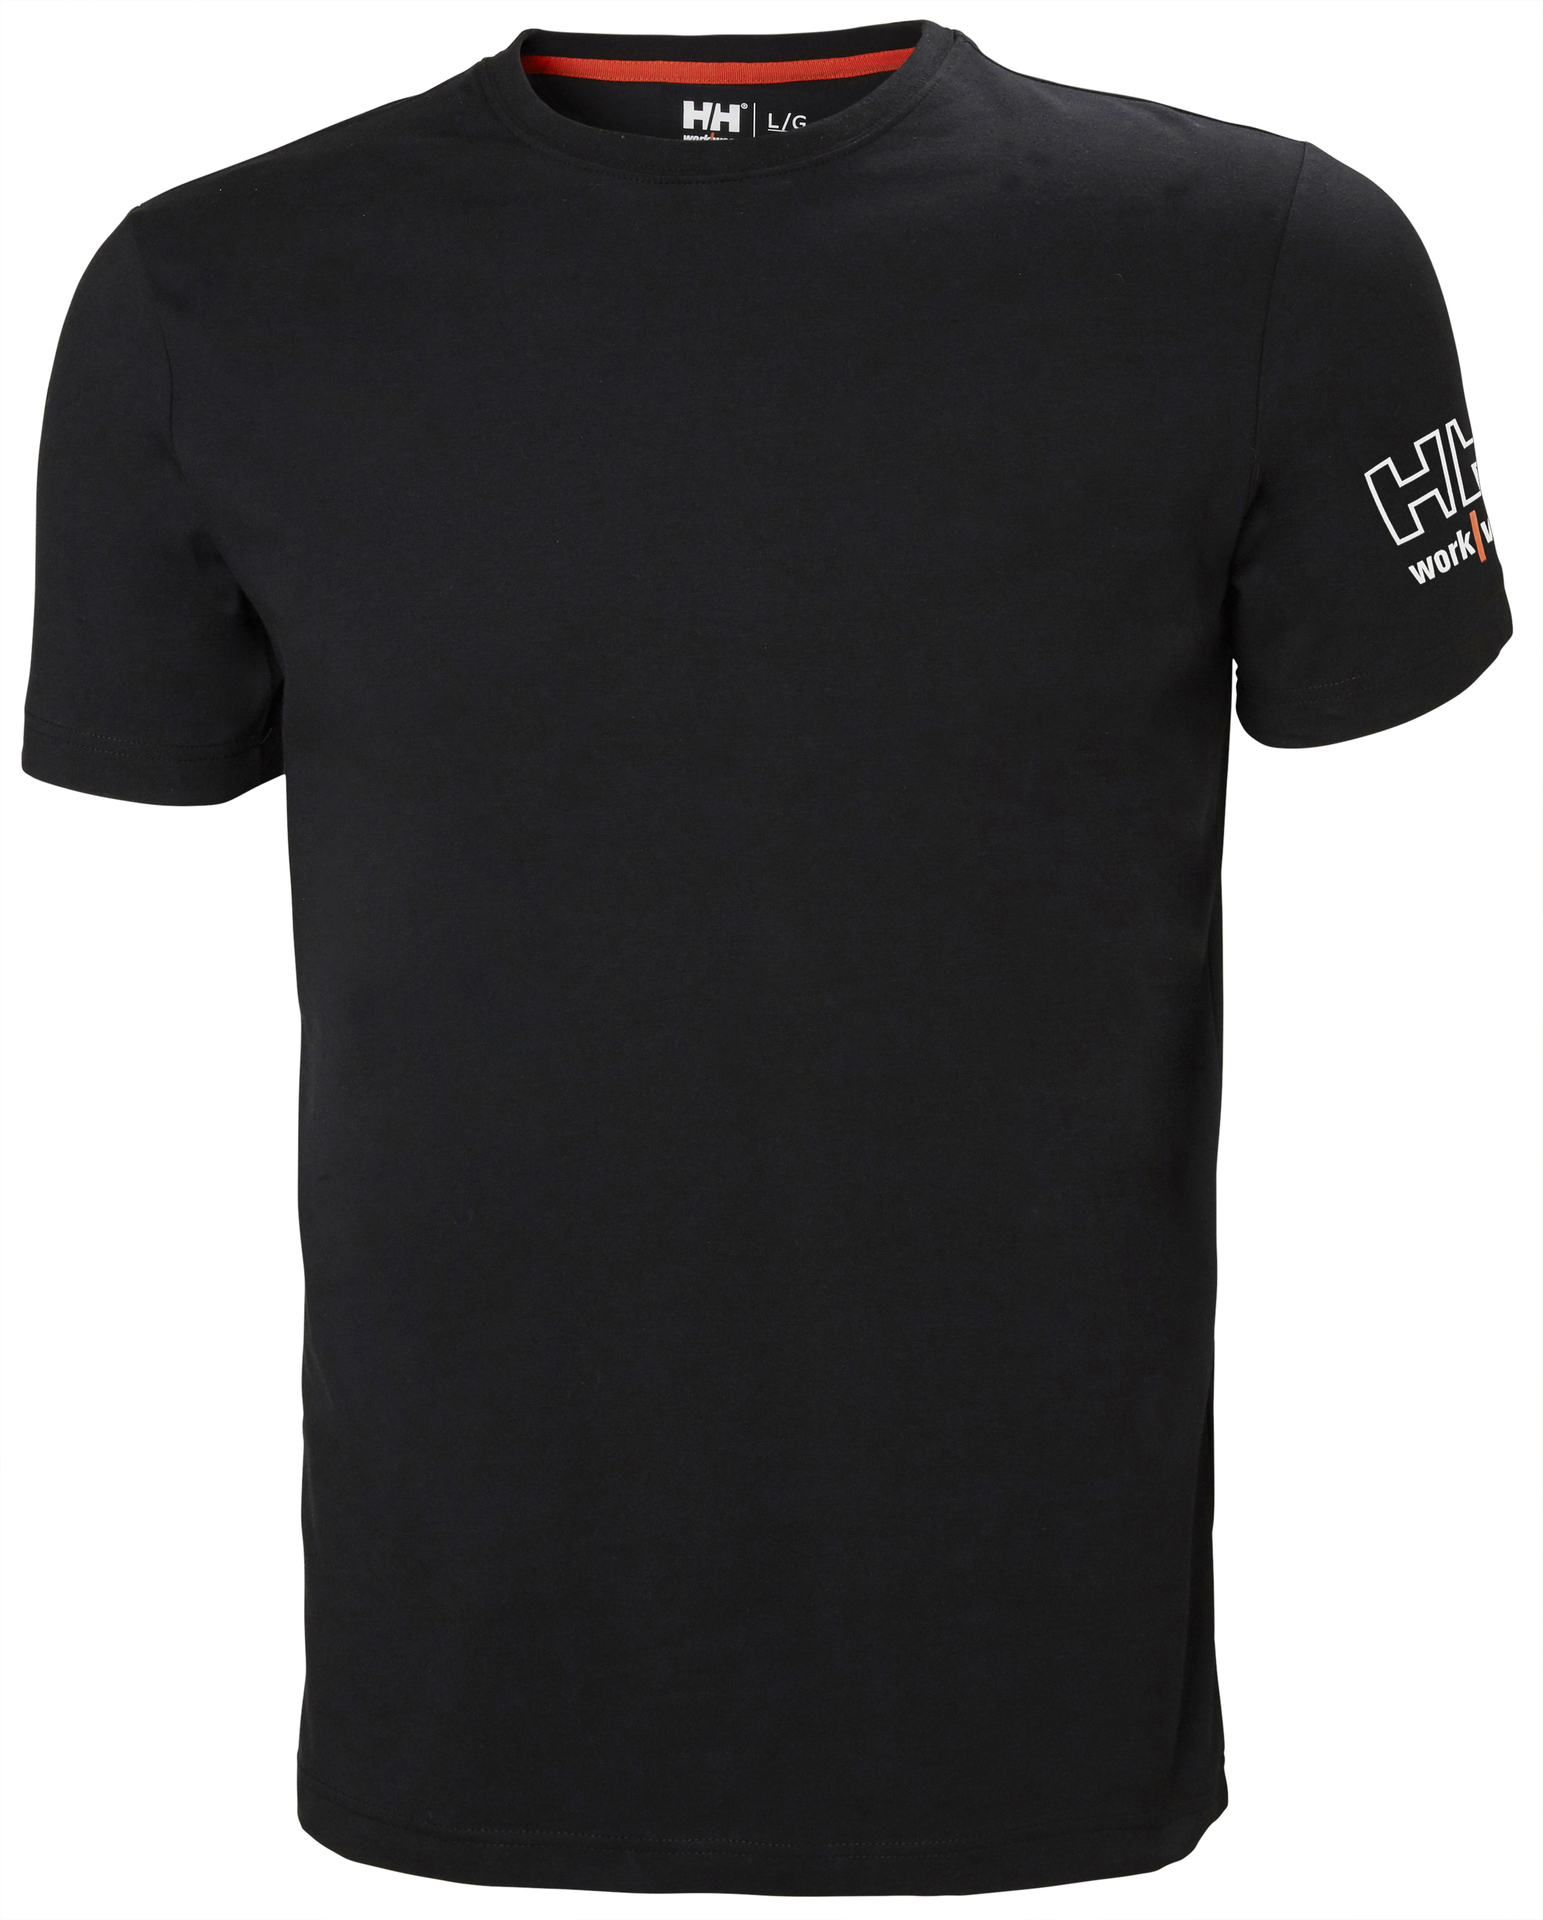 effekt Klinik Selskab KENSINGTON T-shirt (Black) - Raised HH Logo - Helly Hansen 79246_990 -  iWantWorkwear